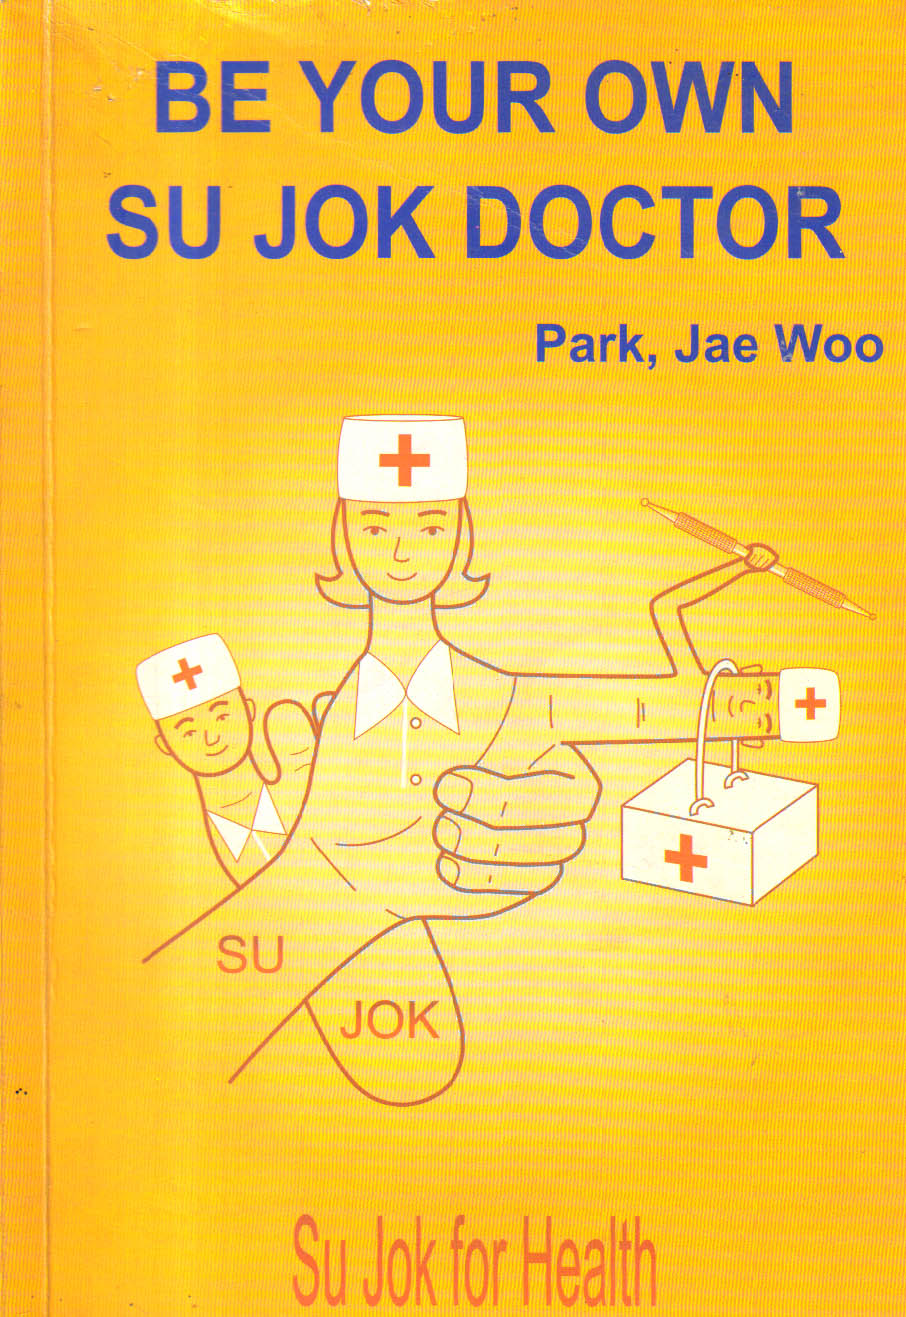 Be Your Own Su jok Doctor